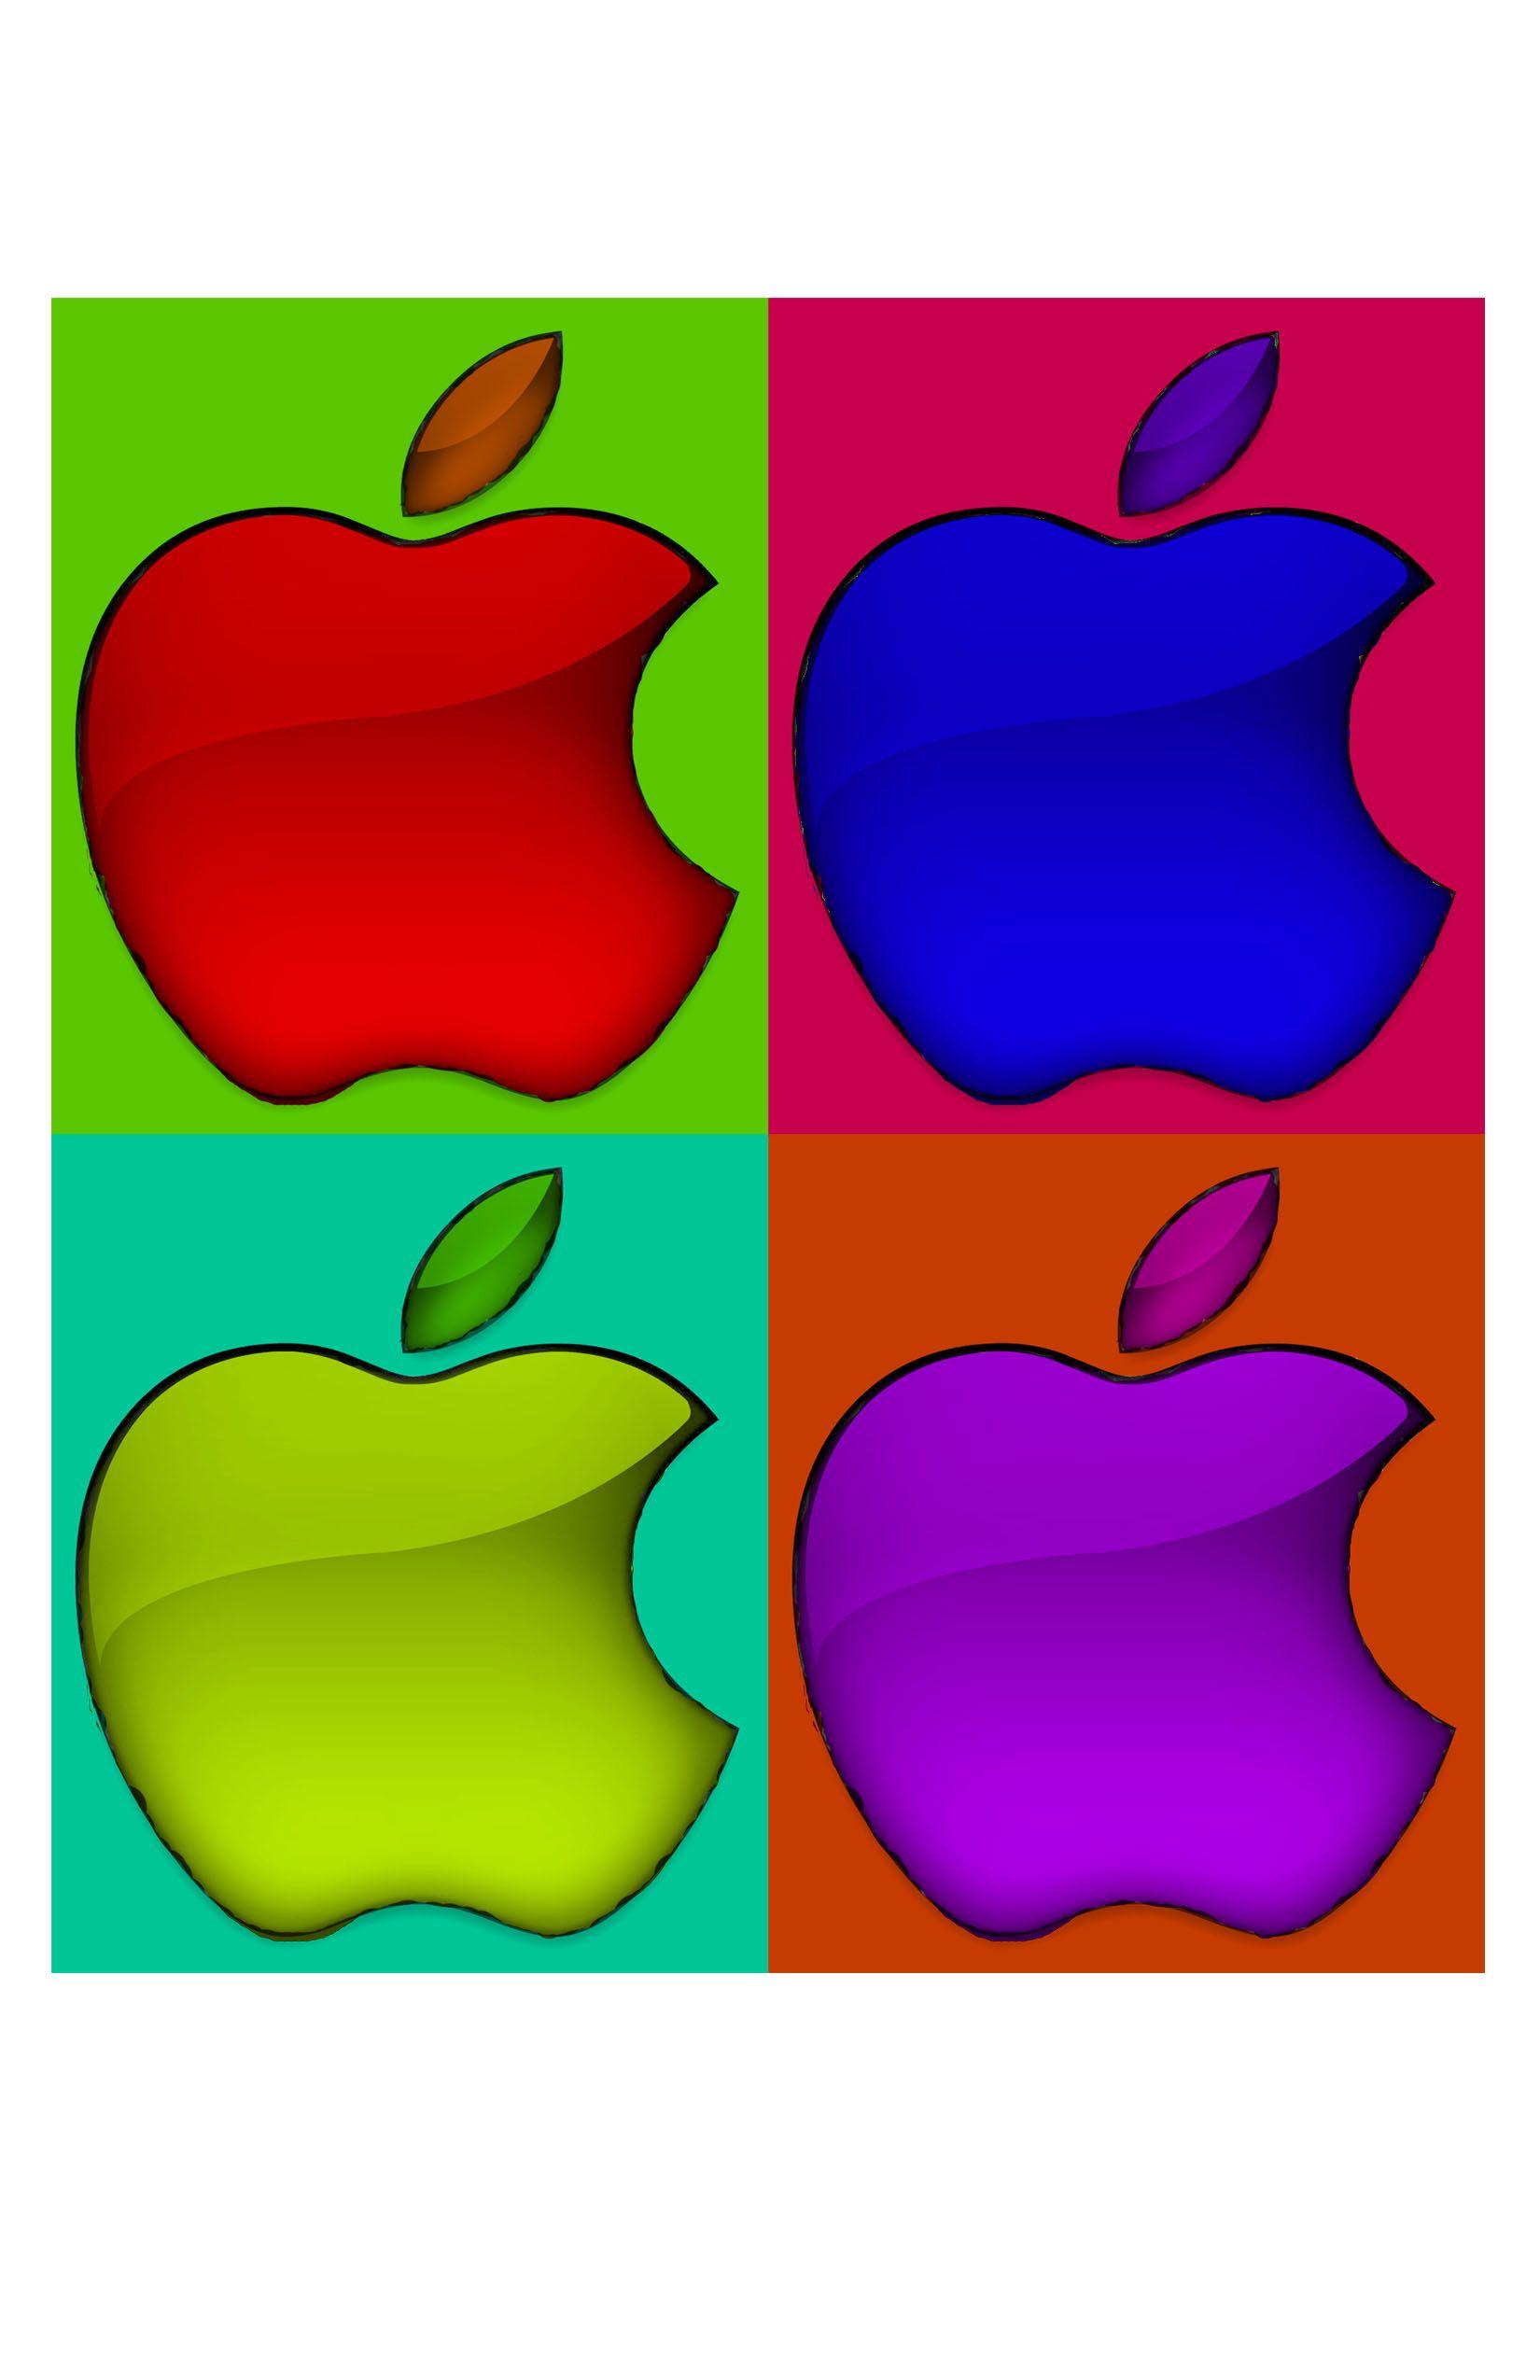 Andy Warhol Logo - Andy Warhol, Apple Logo | Possible art nite projects | Pinterest ...